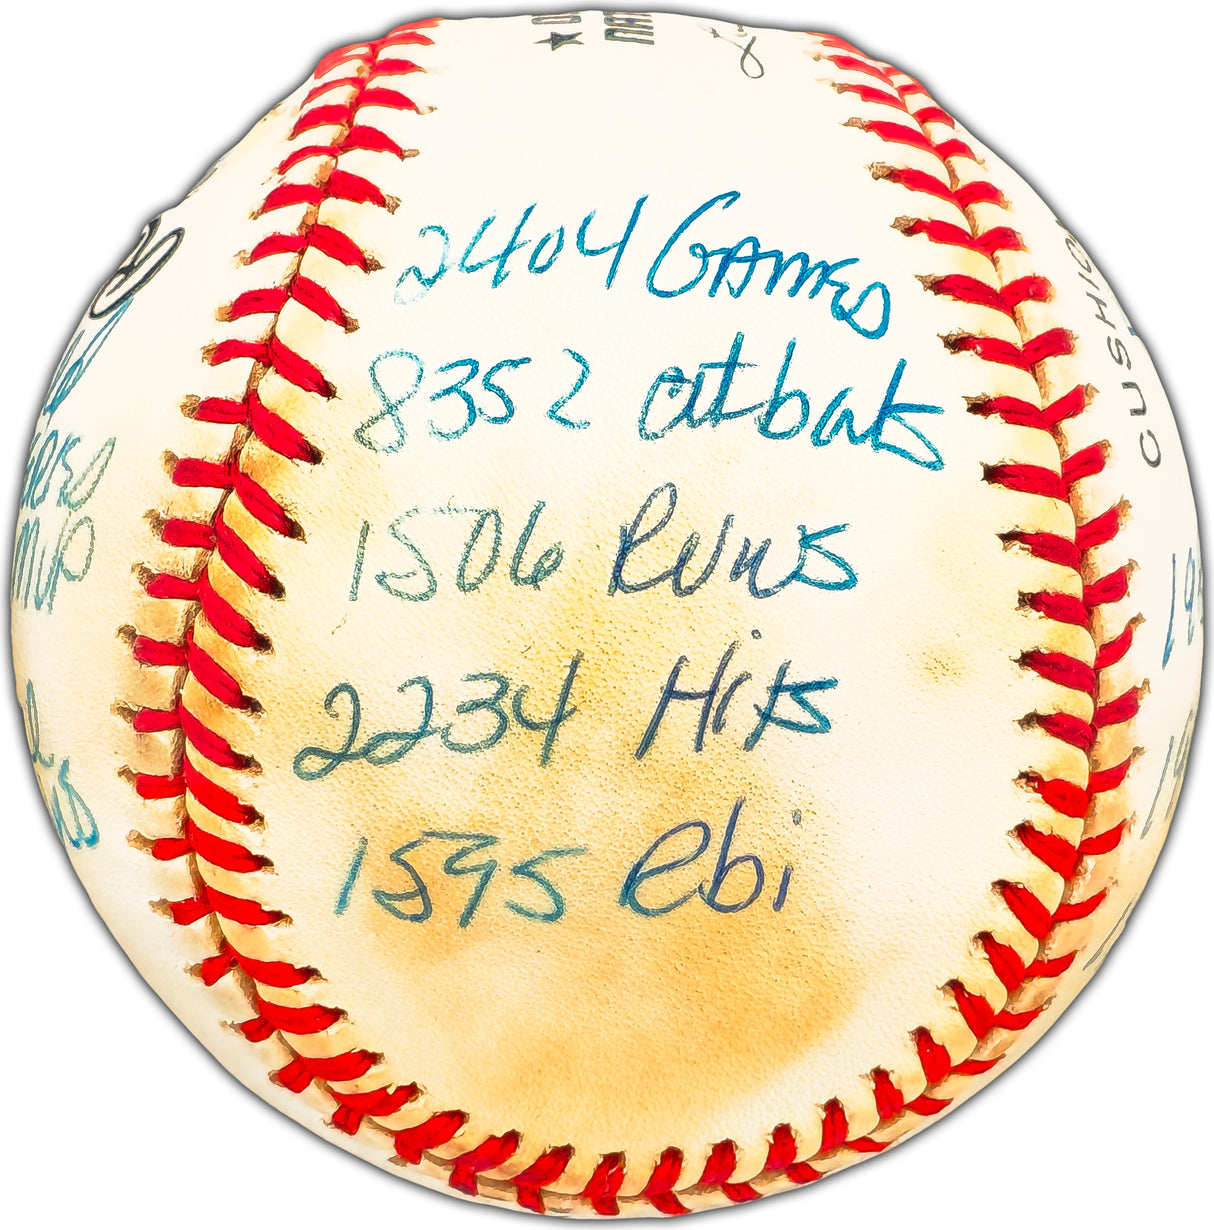 Mike Schmidt Autographed Official NL Statball Baseball Philadelphia Phillies With 16 Stats #447/1000 Beckett BAS #BK44617